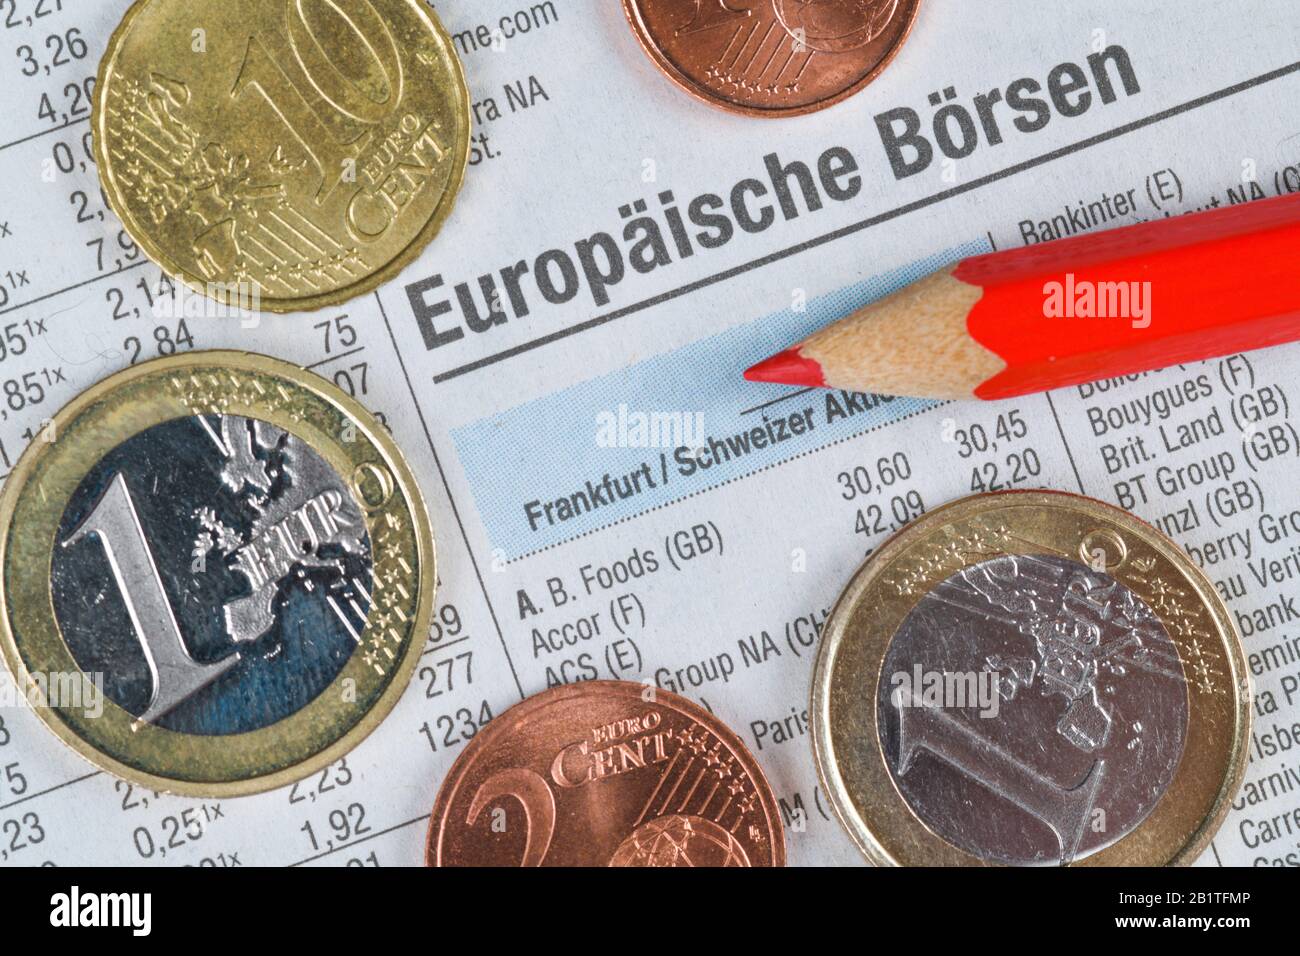 Zeitung, Börsenteil, Euro-Stoxx Stock Photo